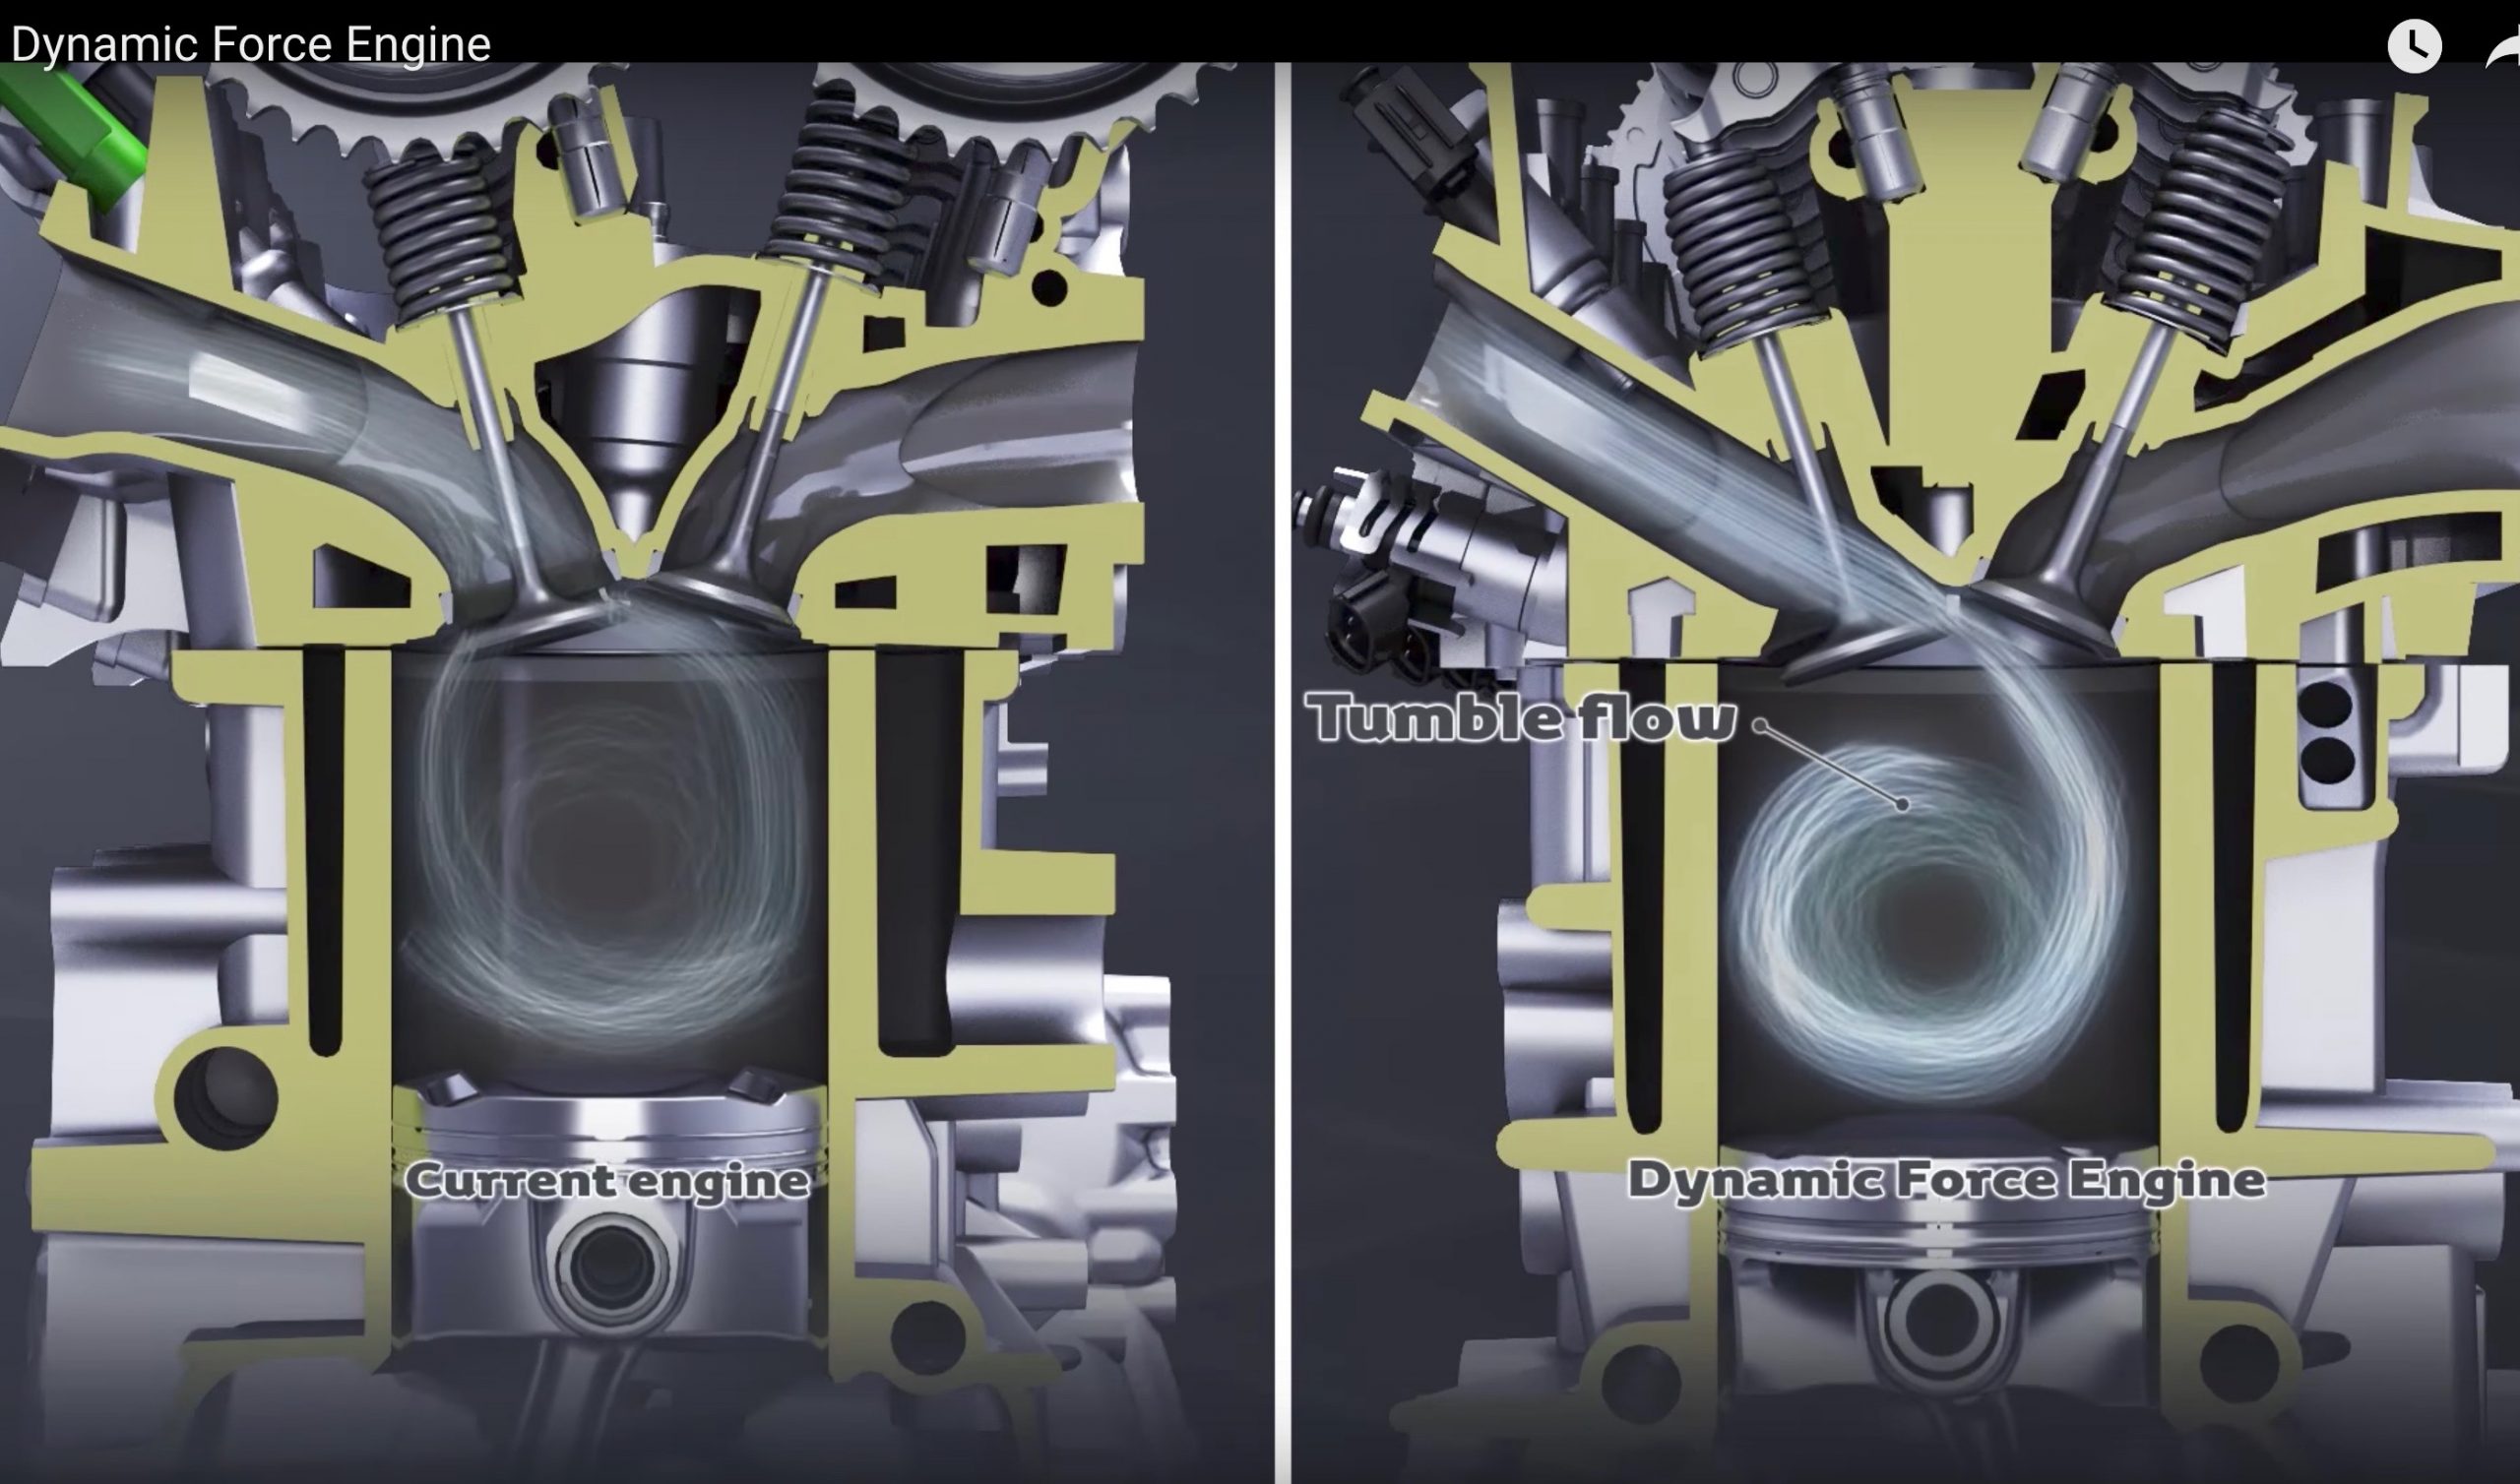 Toyota ‘Dynamic Force’ engine tech to spread across segments